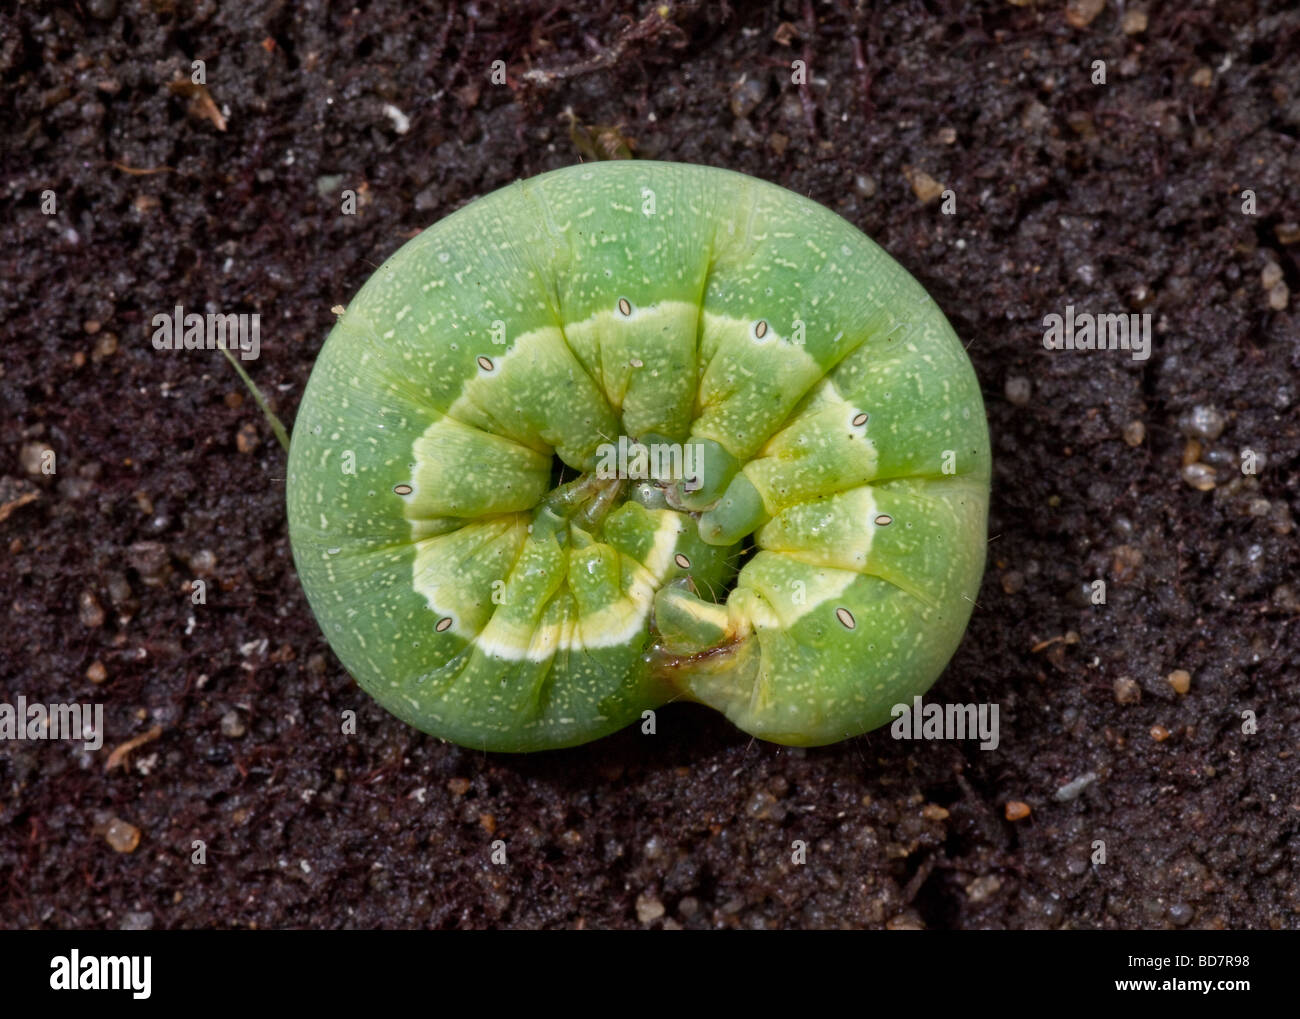 Green catterpillar curled up on dark soil background Stock Photo